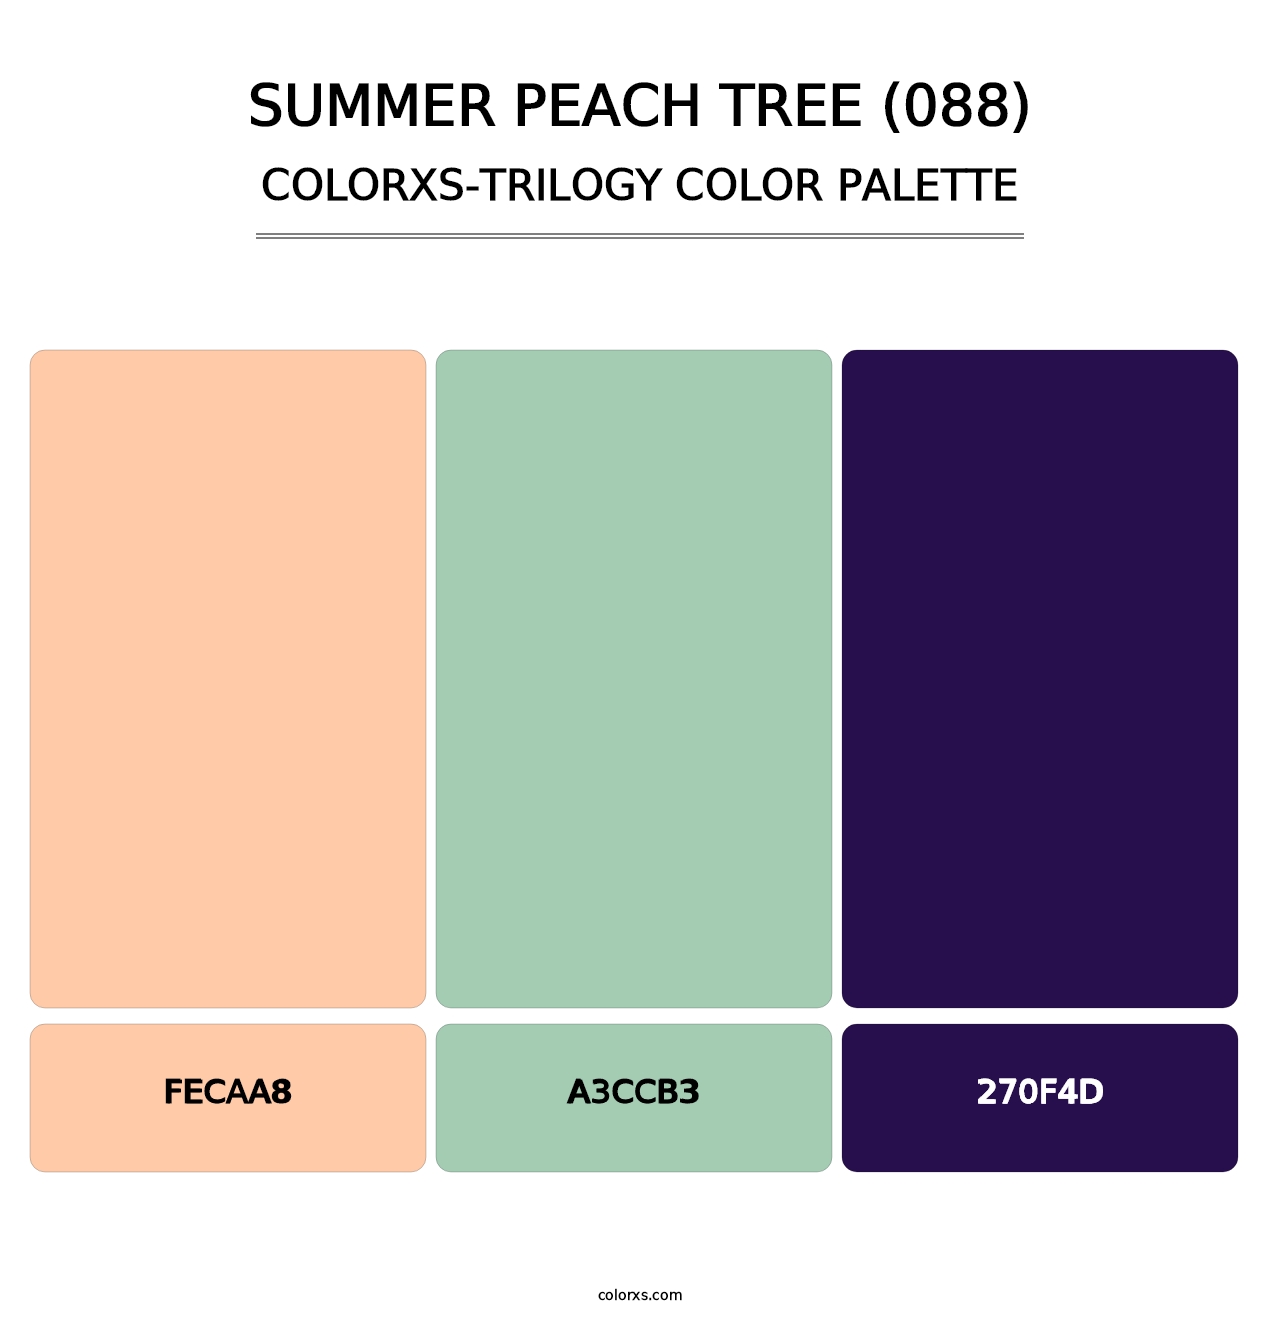 Summer Peach Tree (088) - Colorxs Trilogy Palette